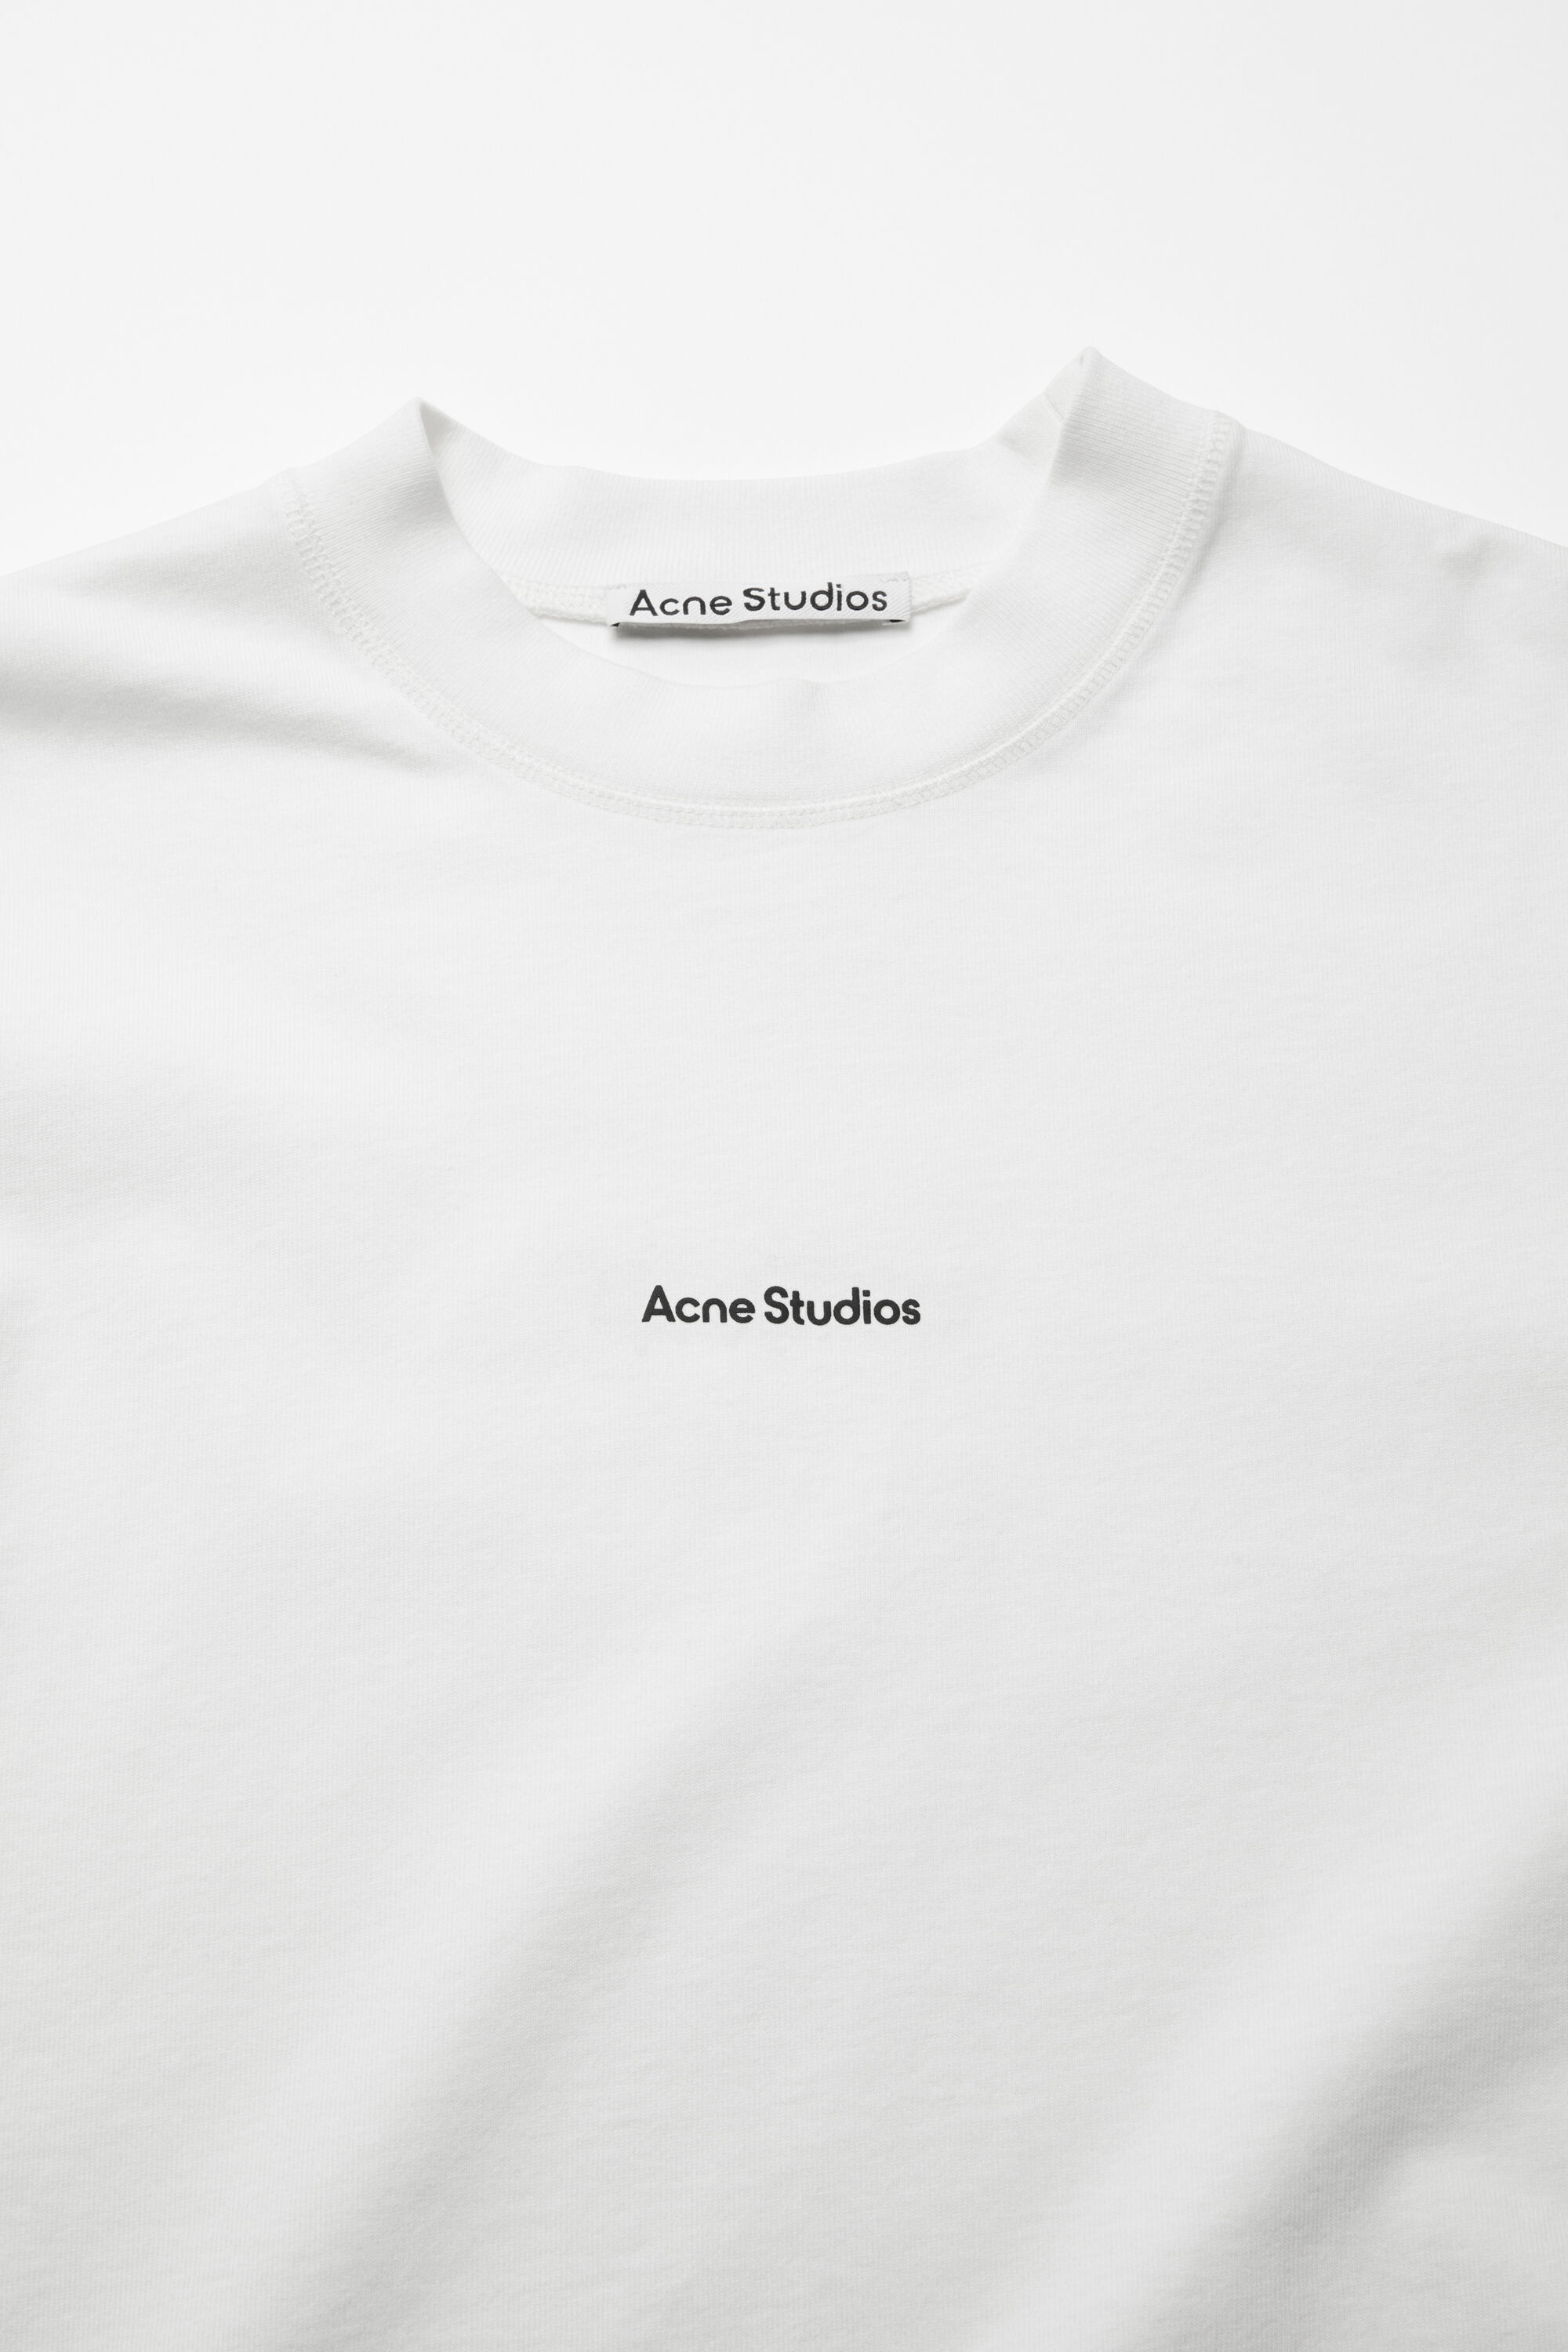 Acne Studios - Logo t-shirt - Optic White